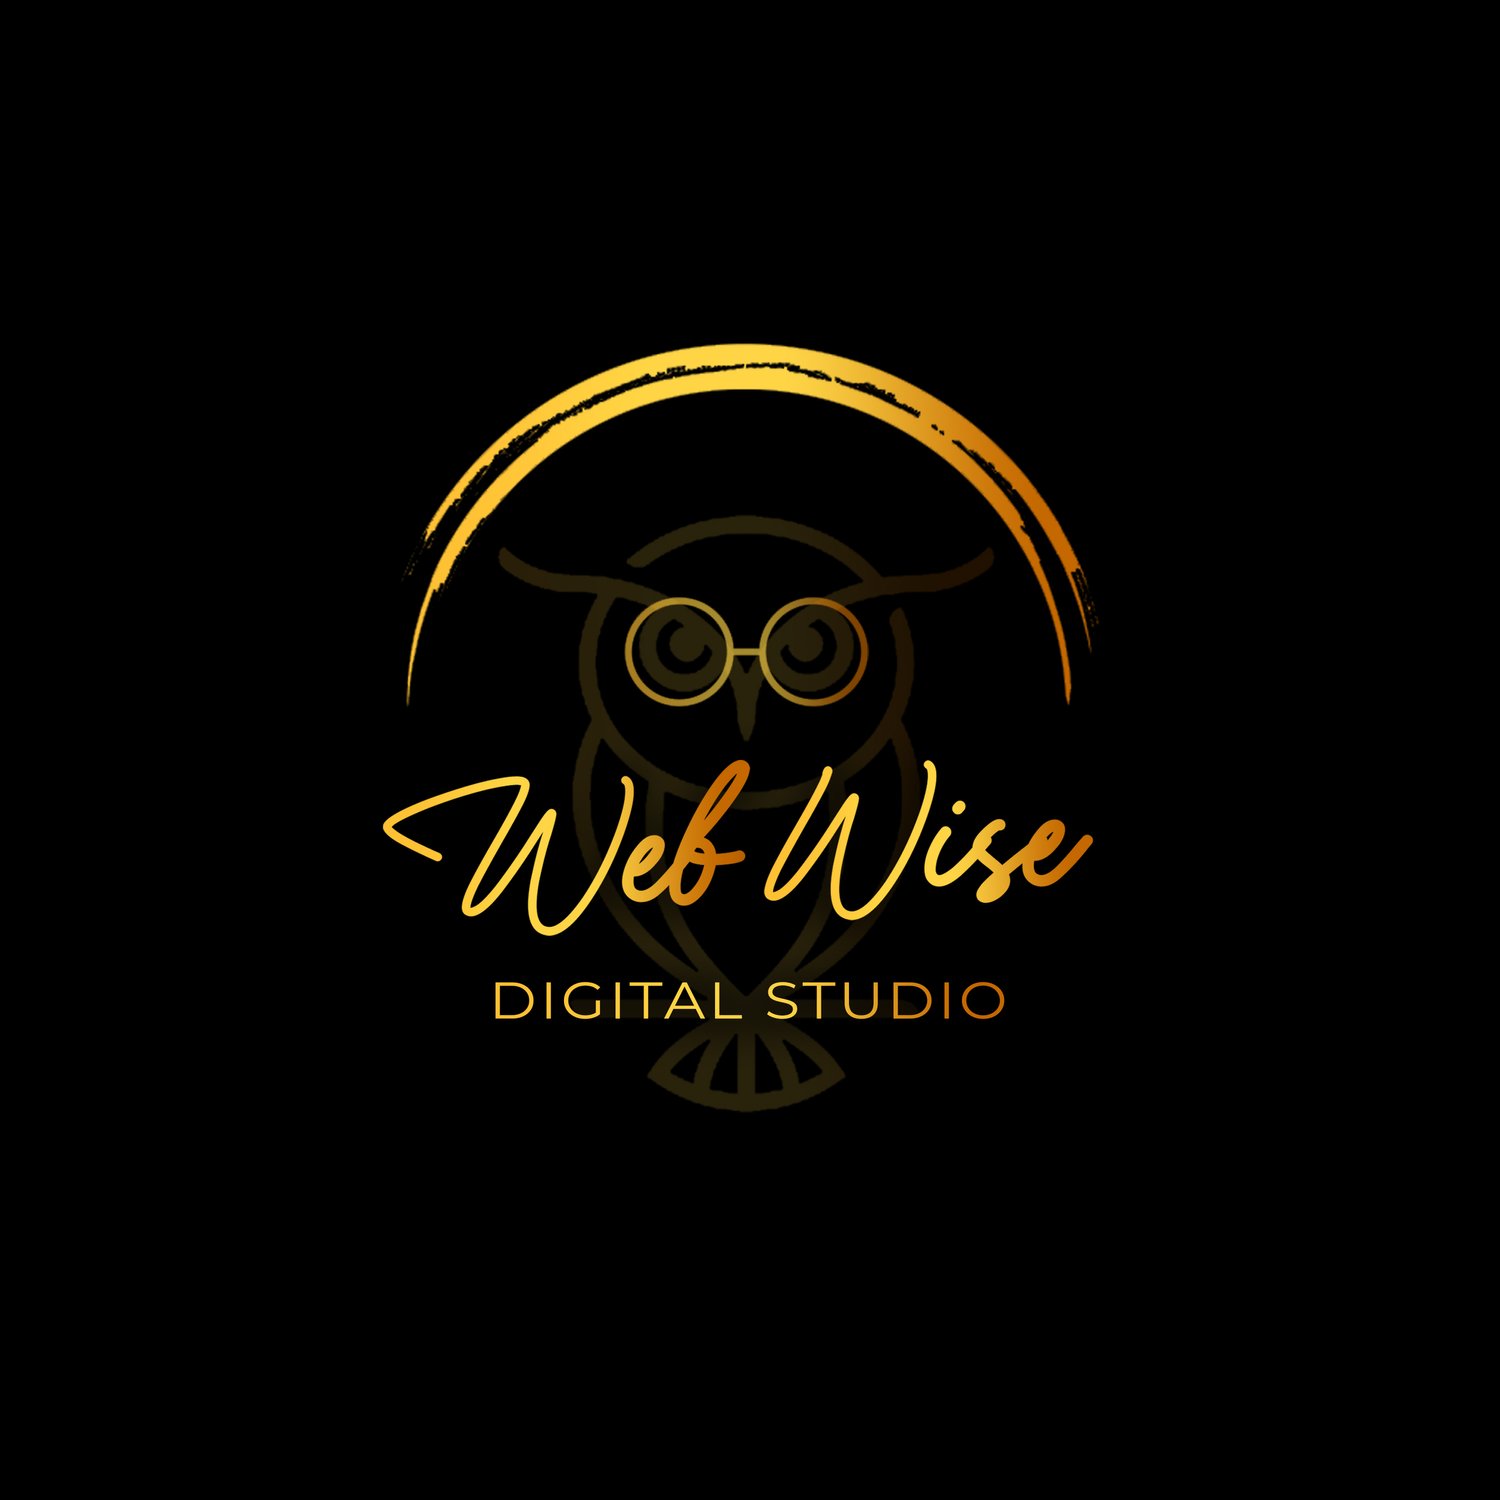 Webwisedigitalstudio